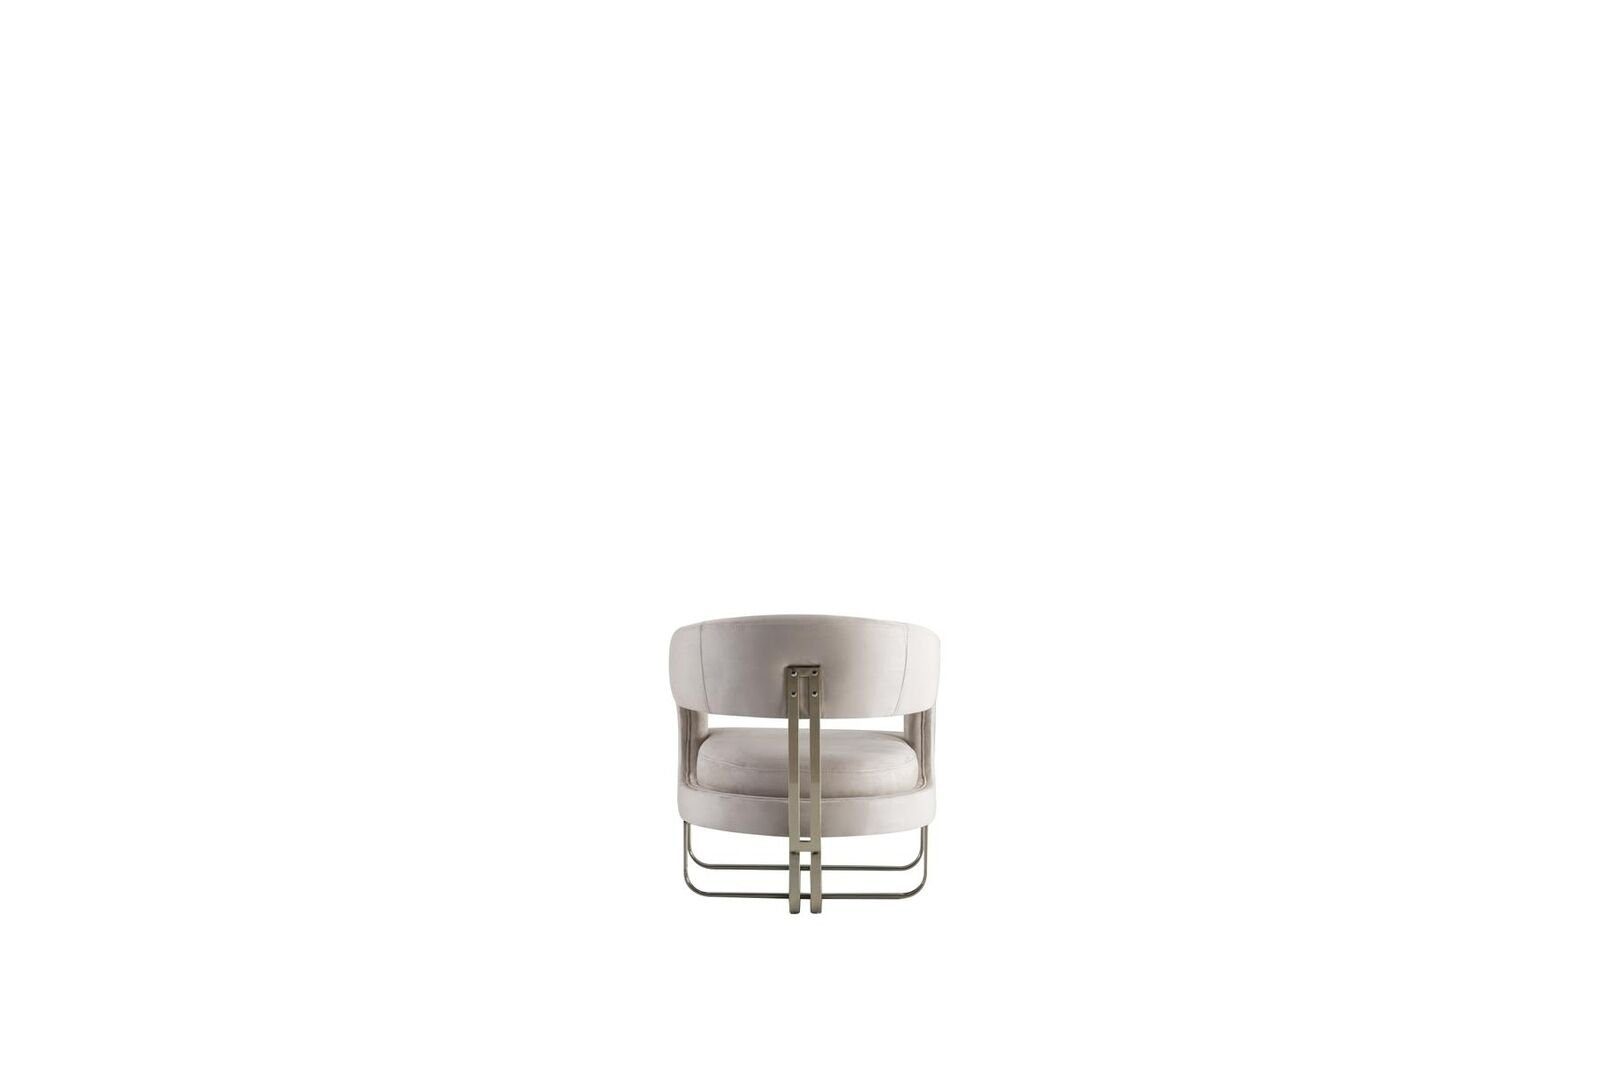 JVmoebel Sessel Sessel Beige Wohnzimmer Sitzer 1 Modern Design Möbel Elegantes